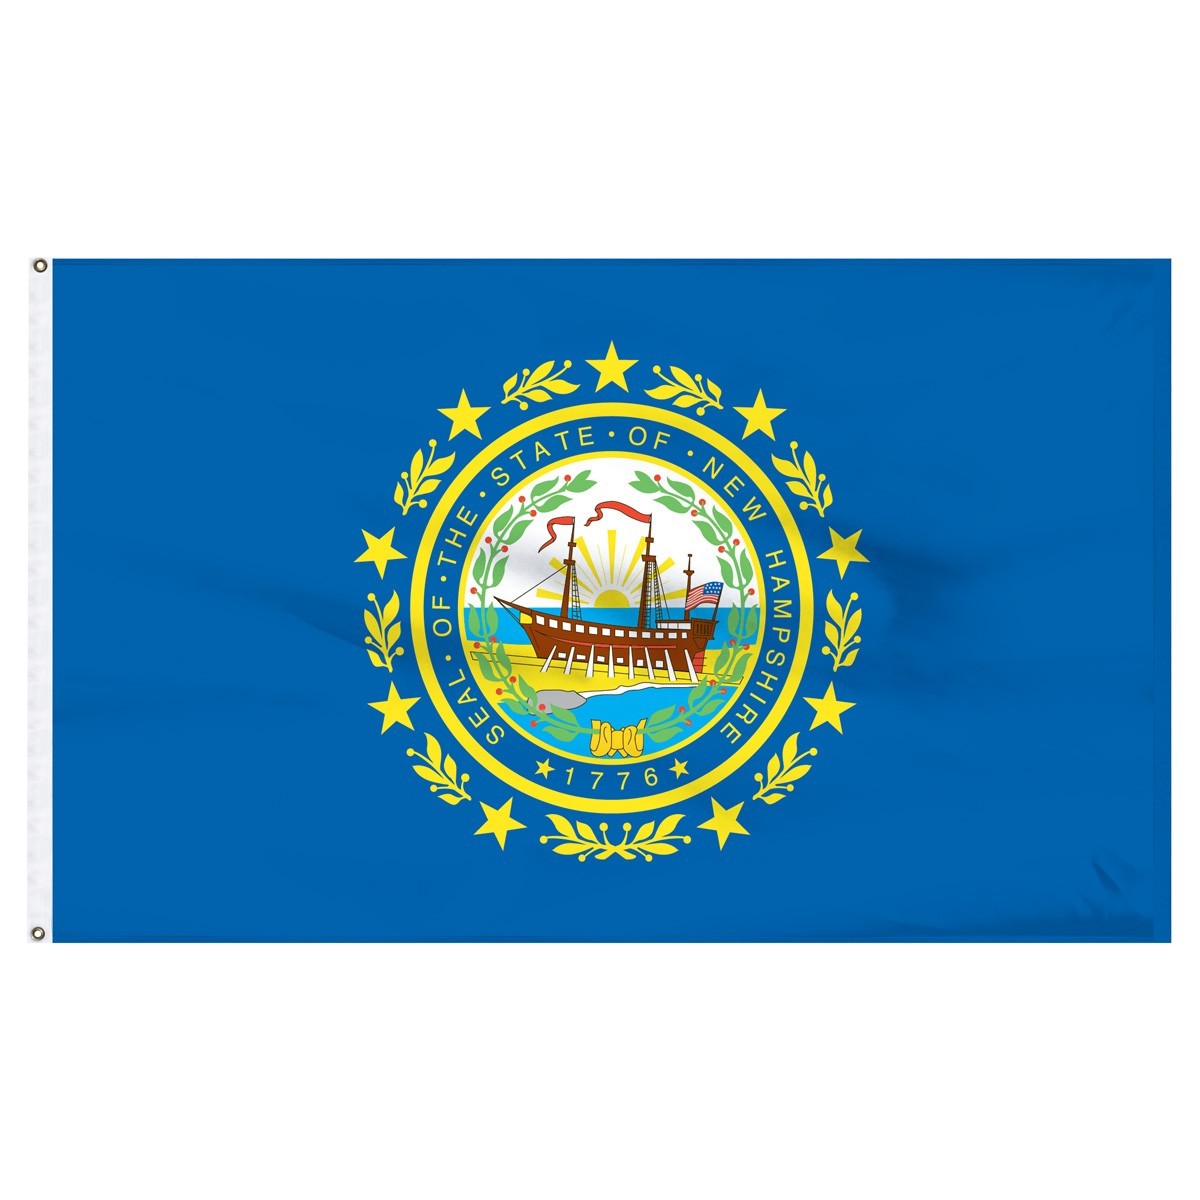 New Hampshire  3' x 5' Outdoor Nylon Flag